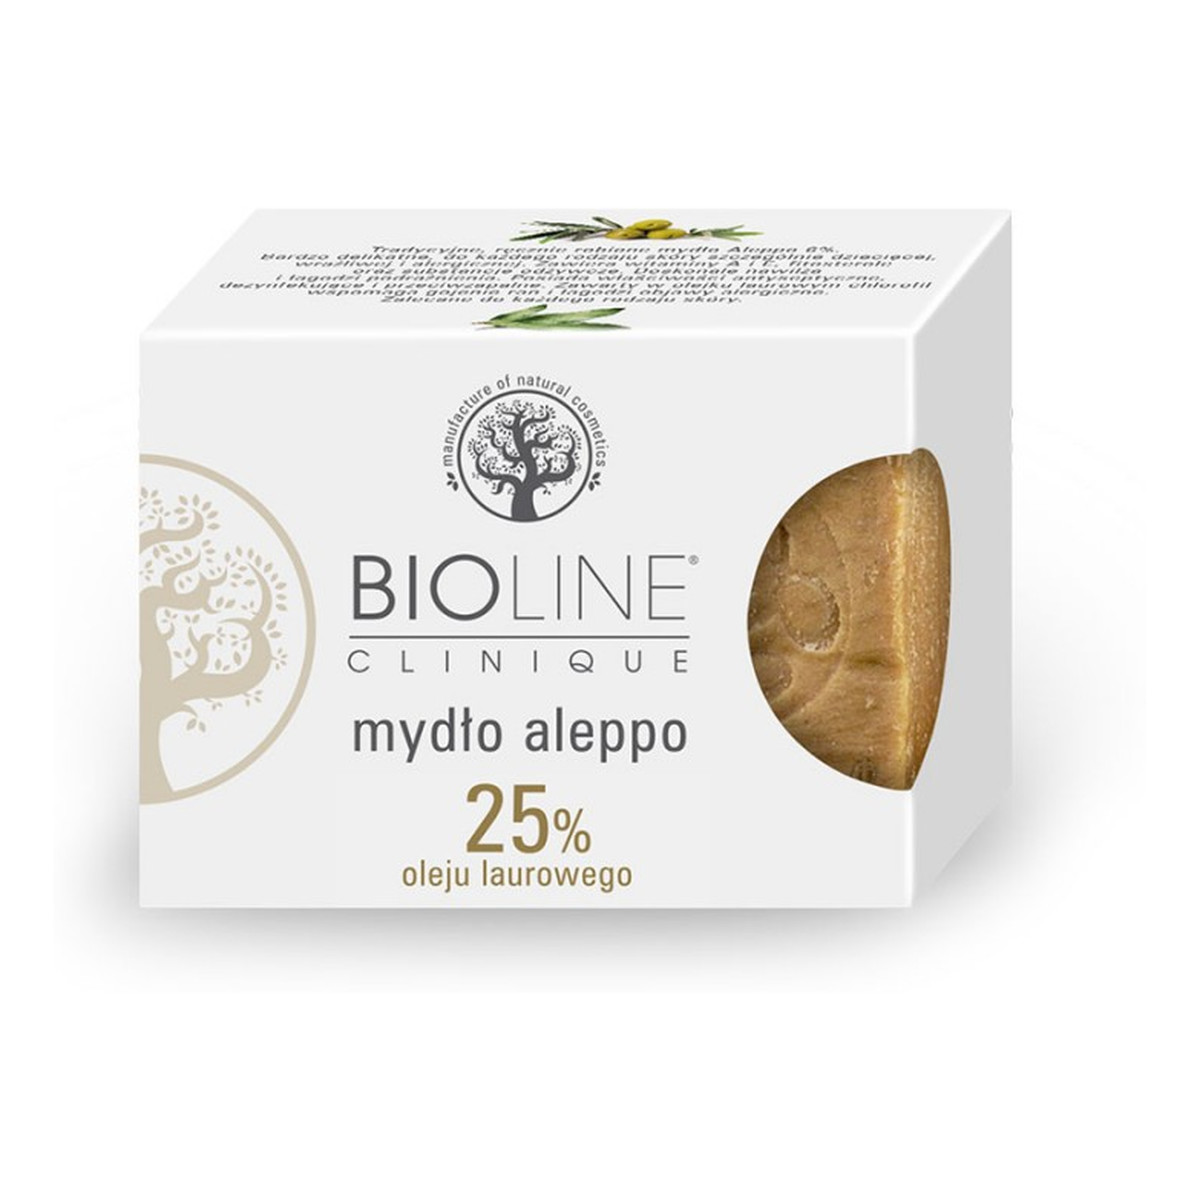 Bioline Clinique Mydło Aleppo 25% Oleju Laurowego 200g